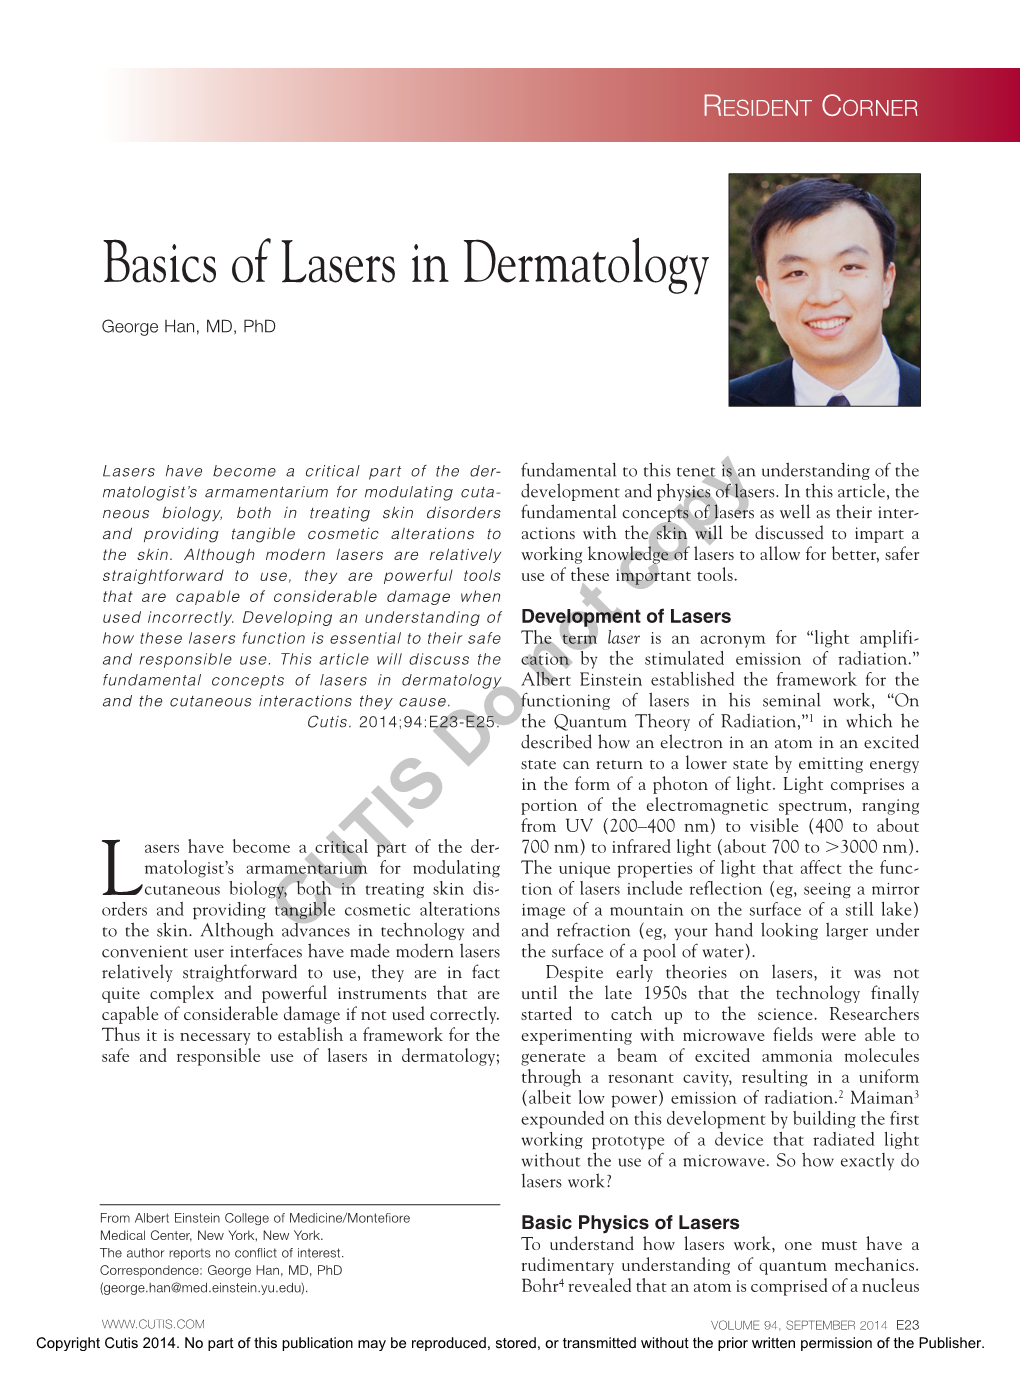 Basics of Lasers in Dermatology